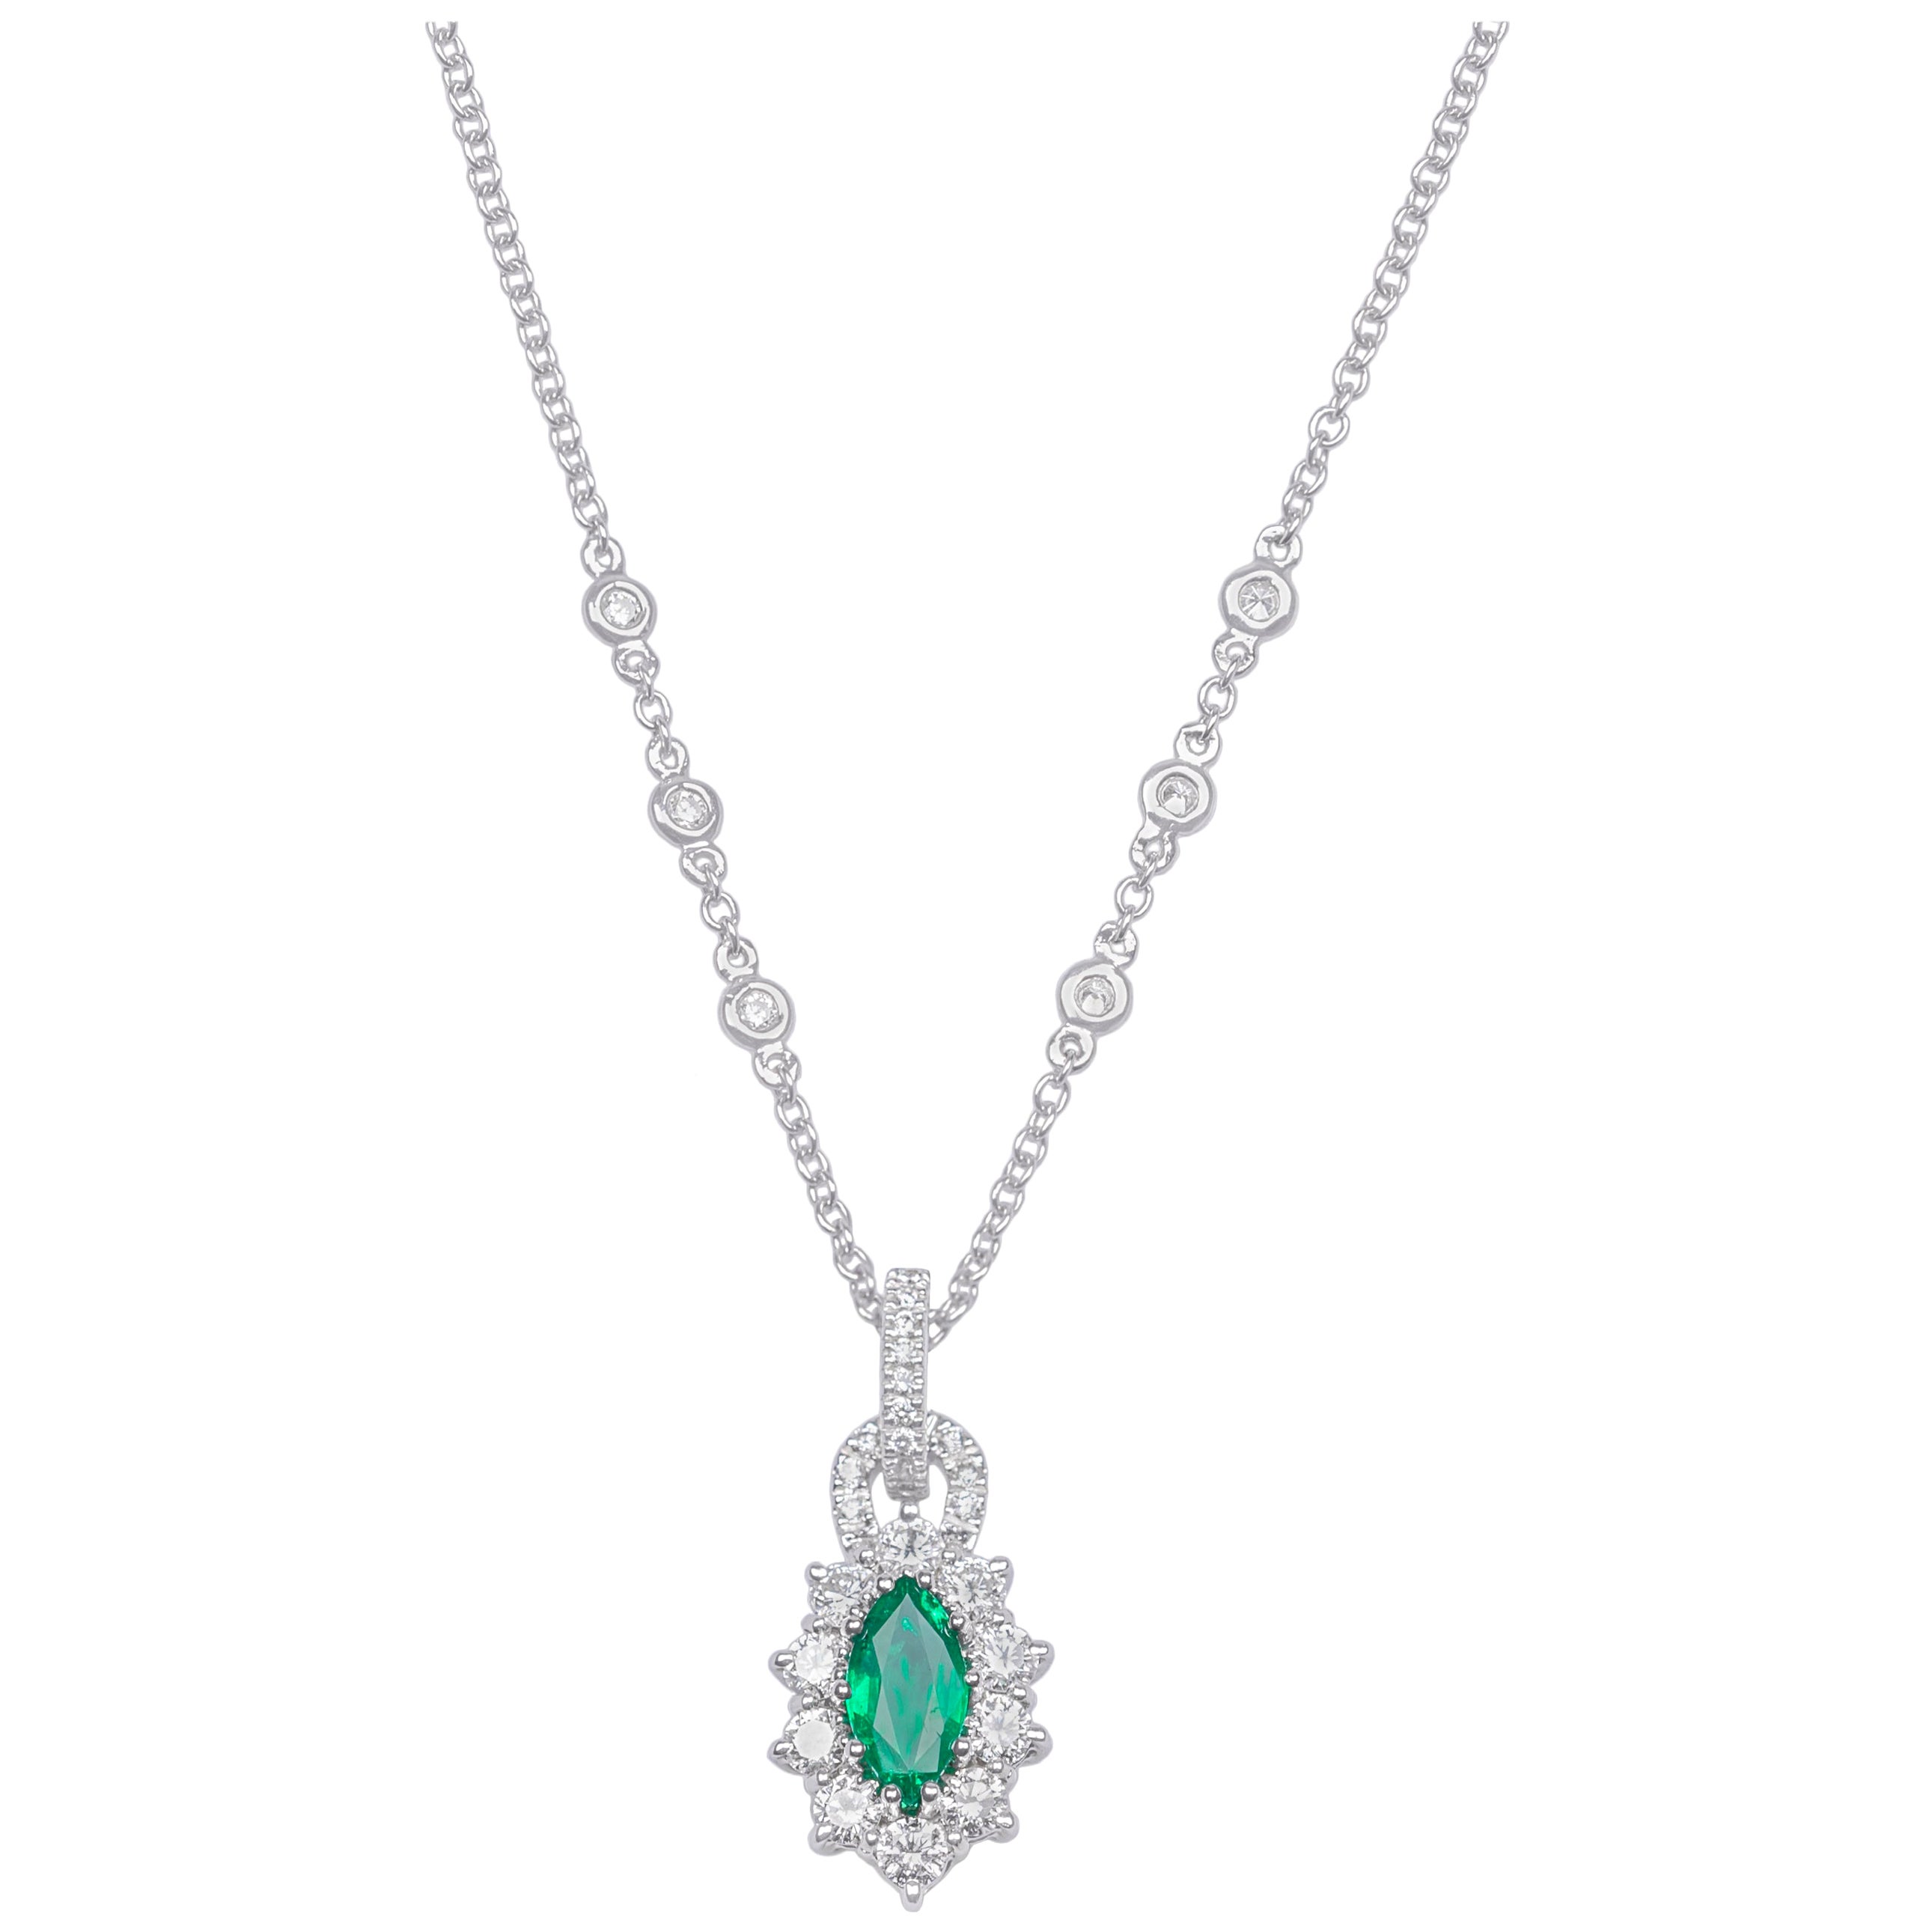 1.30ct Navette 'Marquise' Cut Emerand and Brilliant Cut Diamonds Necklace